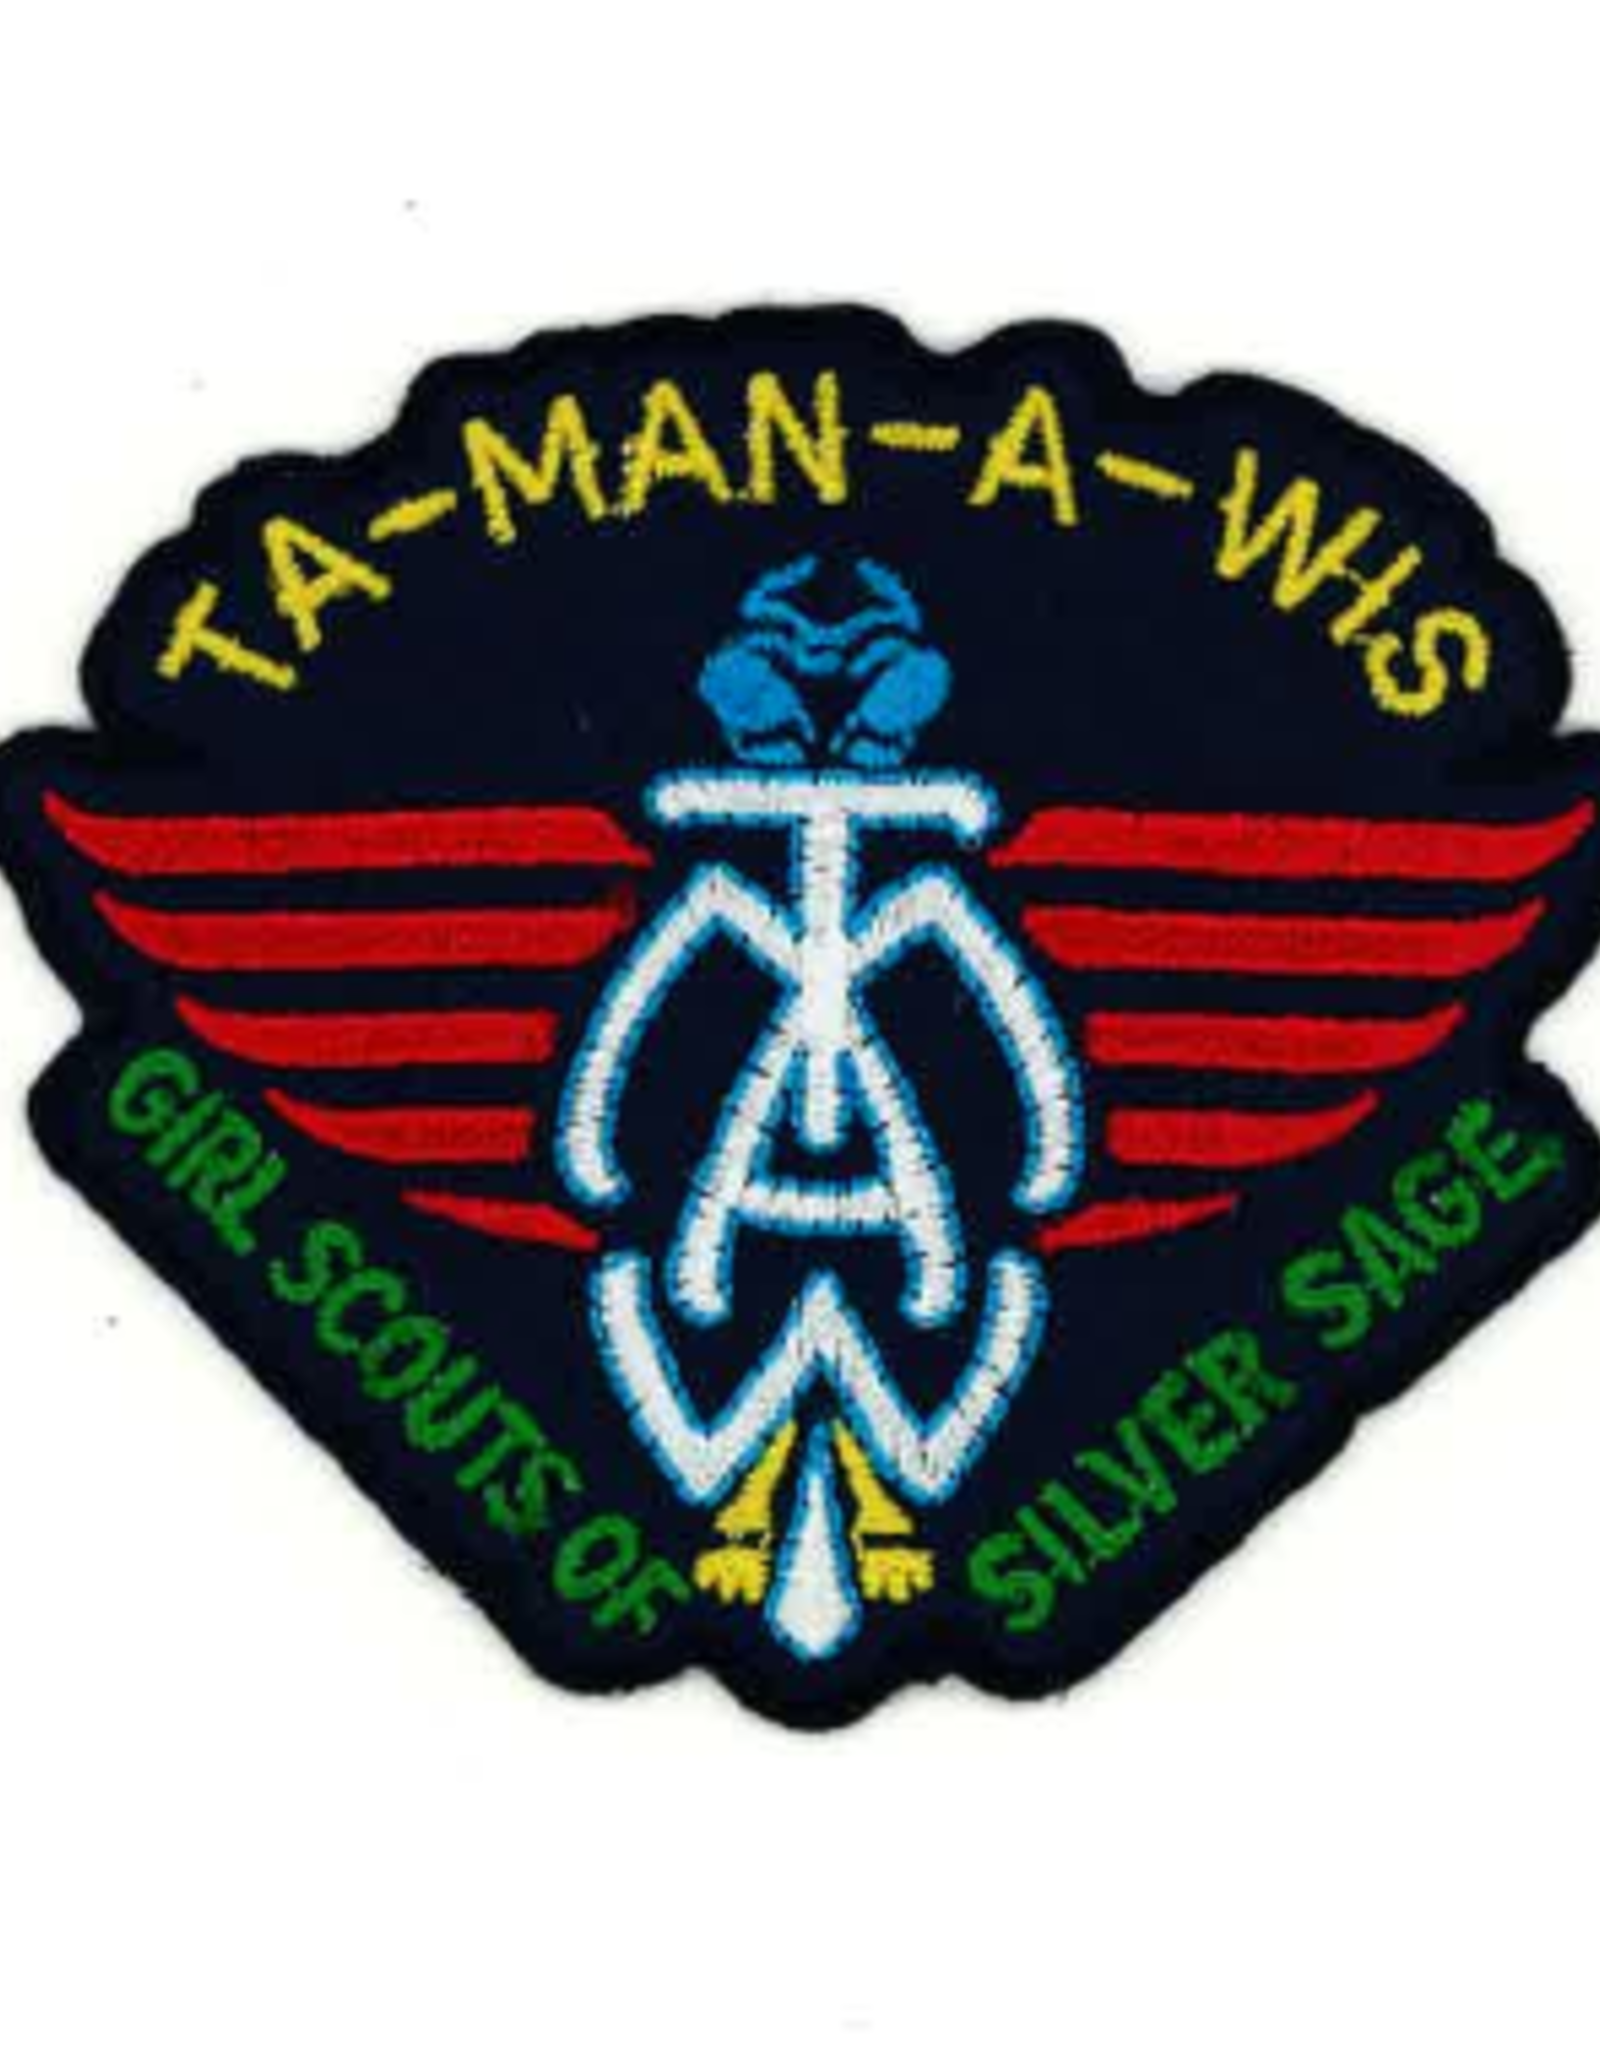 Advantage Emblem & Screen Prnt Silver Sage Camp Ta-Man-A-Wis TAM Thunderbird Fun Patch